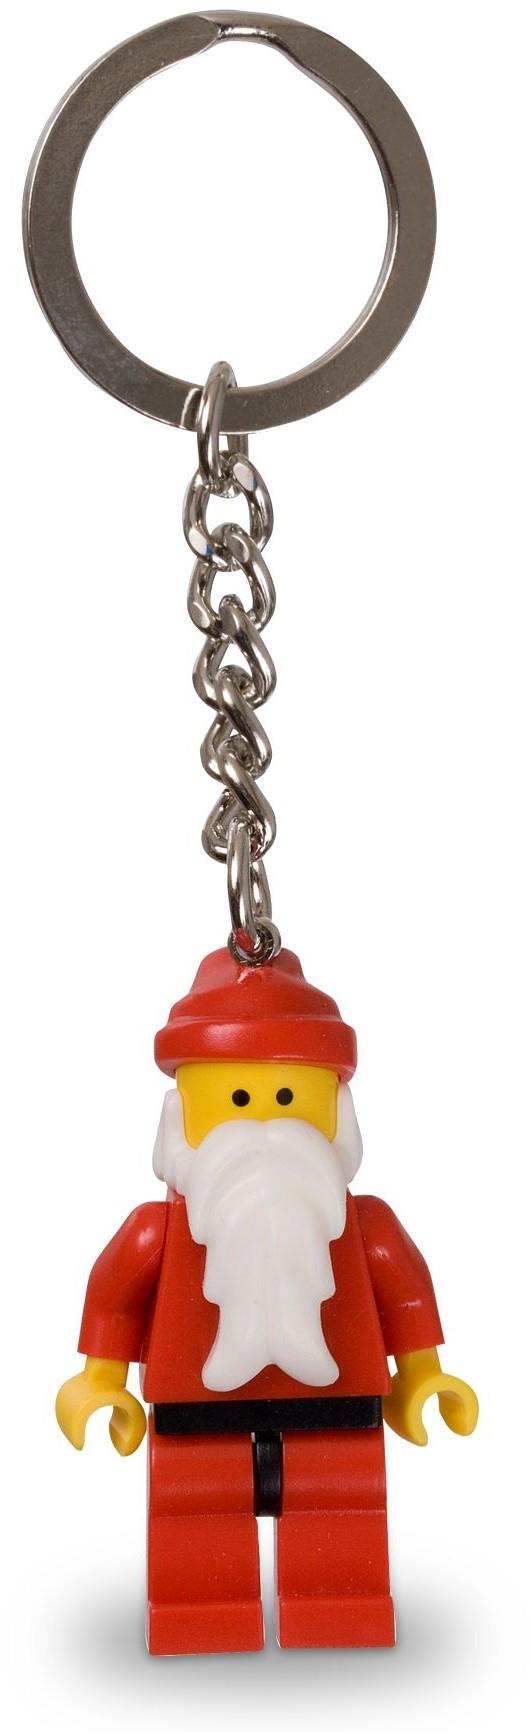 NIB Lego Exclusive Santa Claus Classic Key Chain Set 850150 Keychain